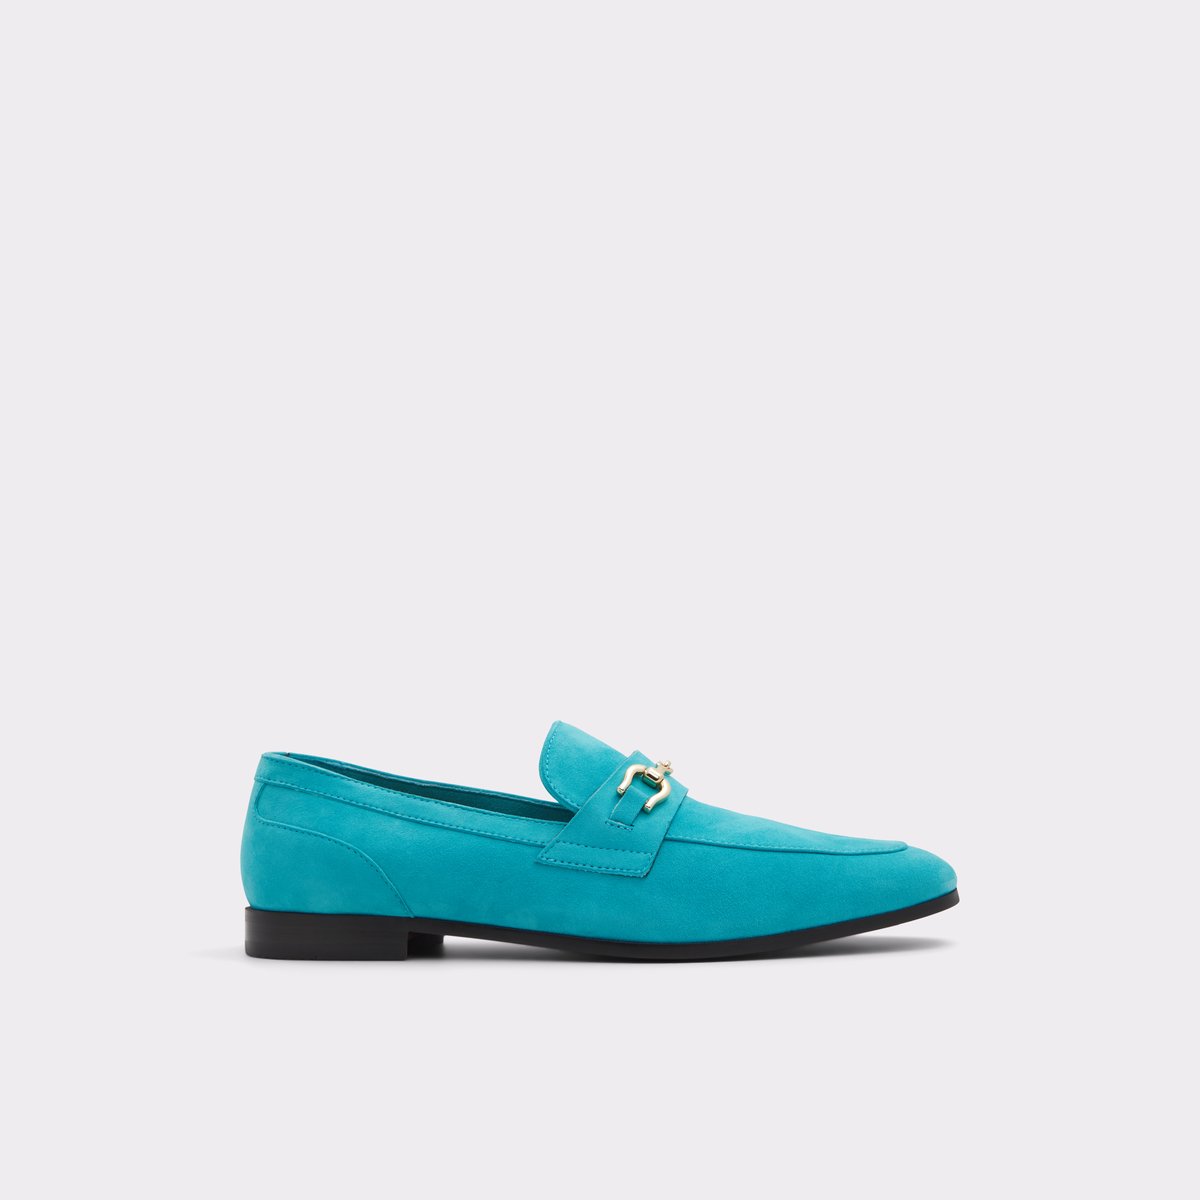 Marinho Turquoise Men's Loafers & Slip-Ons | ALDO Canada